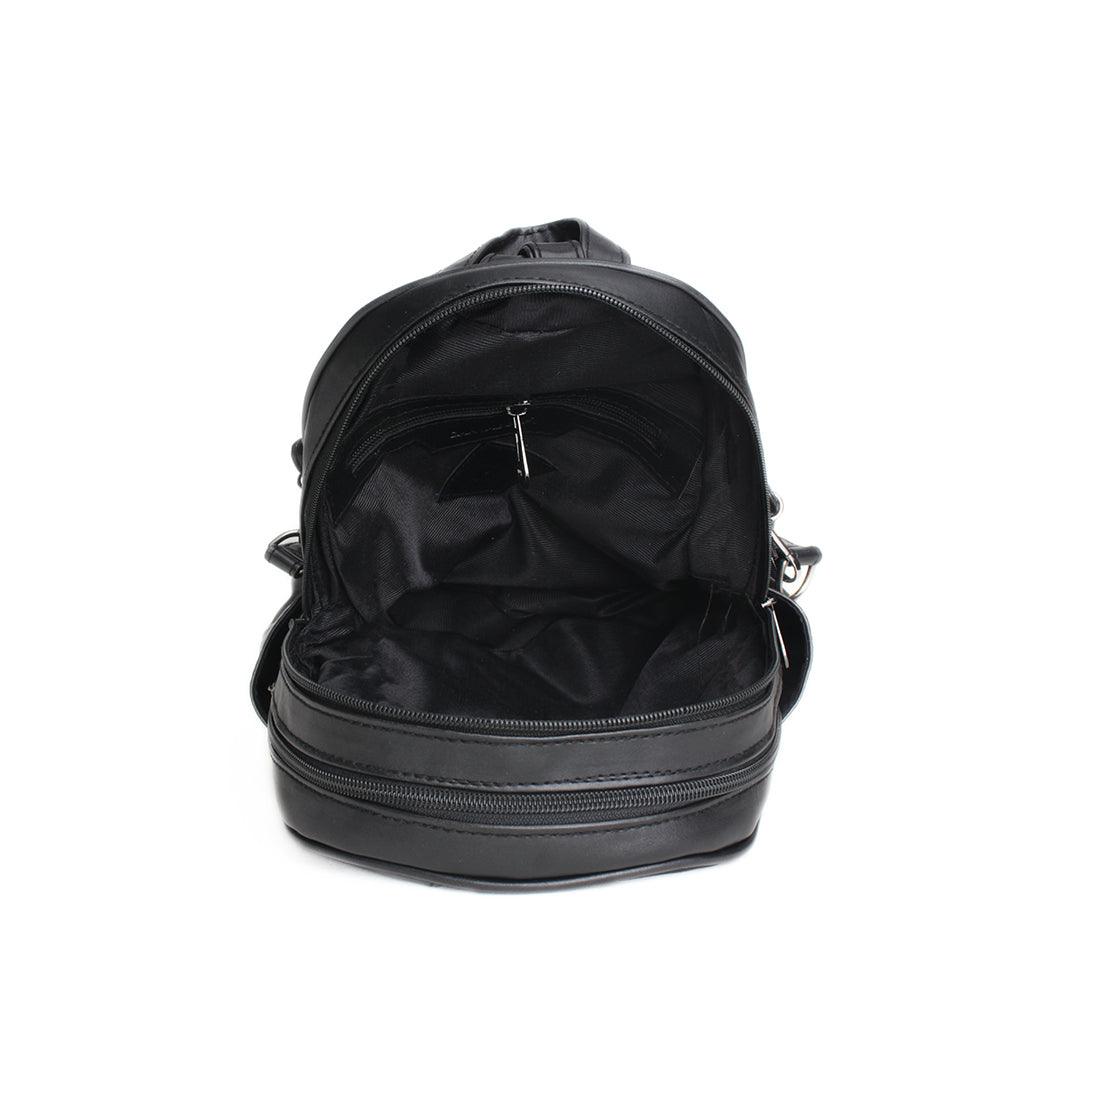 Black Mixed Backpack Sky Art - CANVAEGYPT